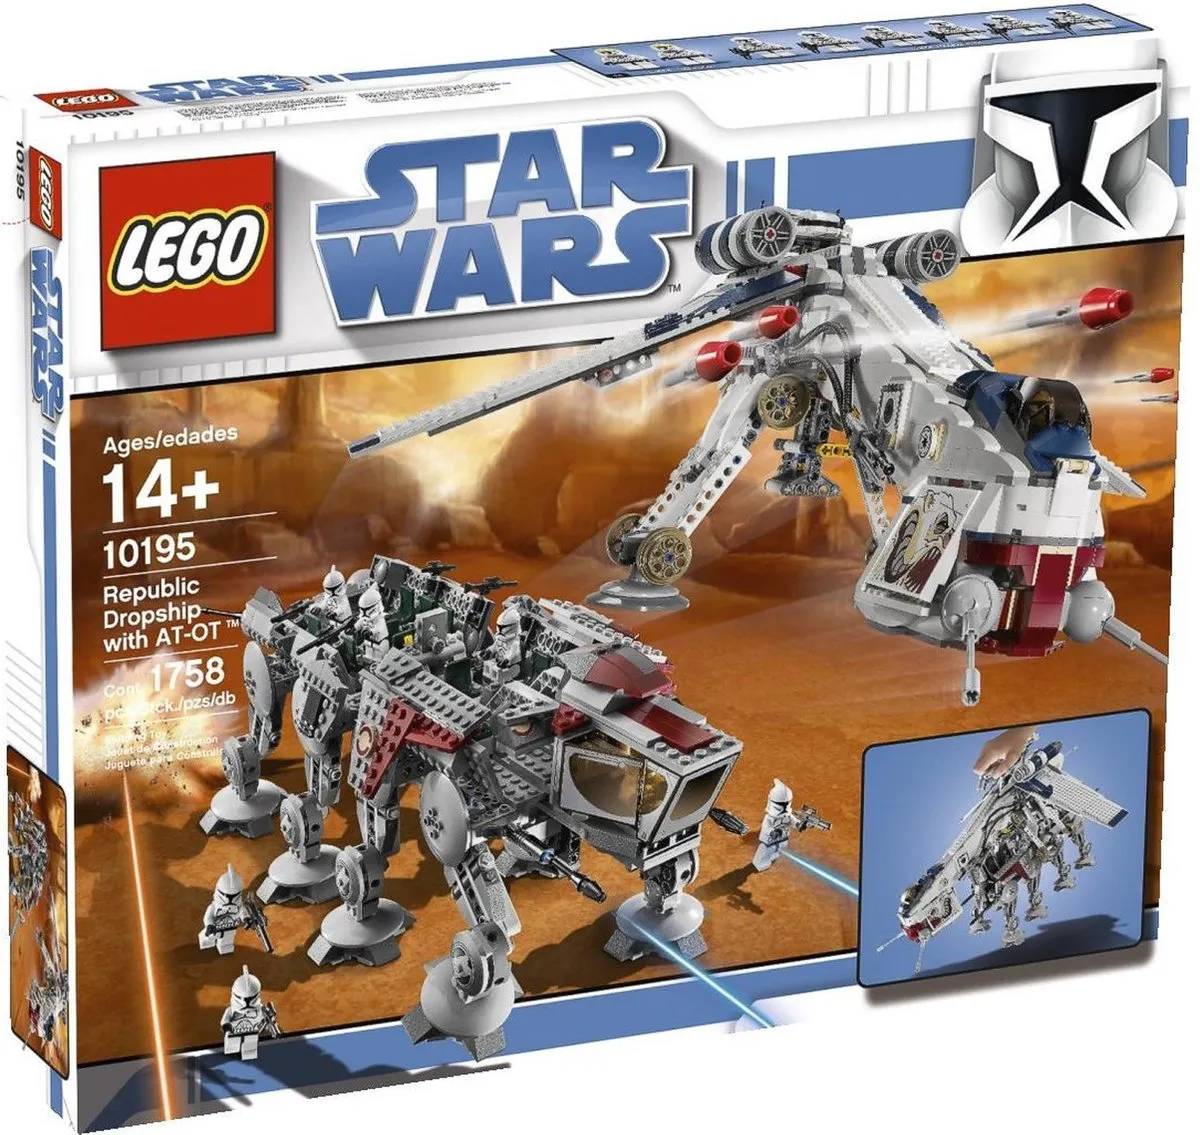 LEGO 10195 Republic Dropship met AT-OT Walker speelgoed